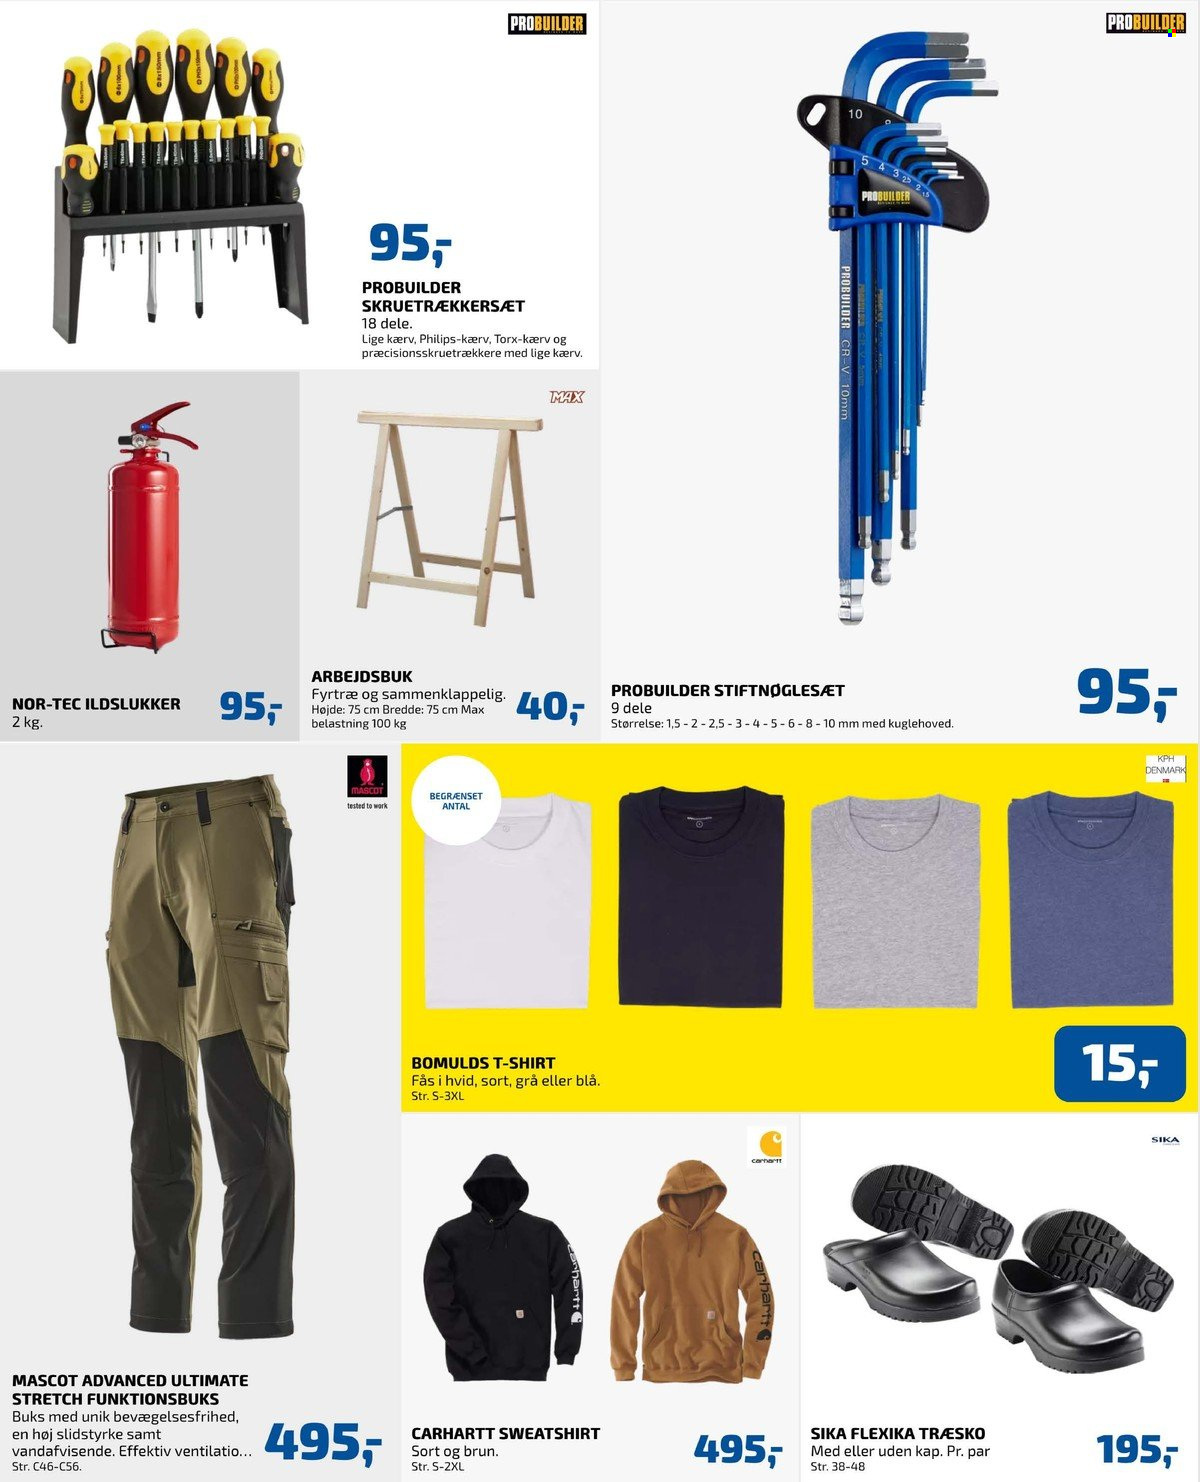 thumbnail - Davidsen tilbud  - 24.11.2022 - 30.11.2022 - tilbudsprodukter - Philips, bukser, T-shirt, sweatshirt, arbejdsbuk, skruetrækker. Side 7.